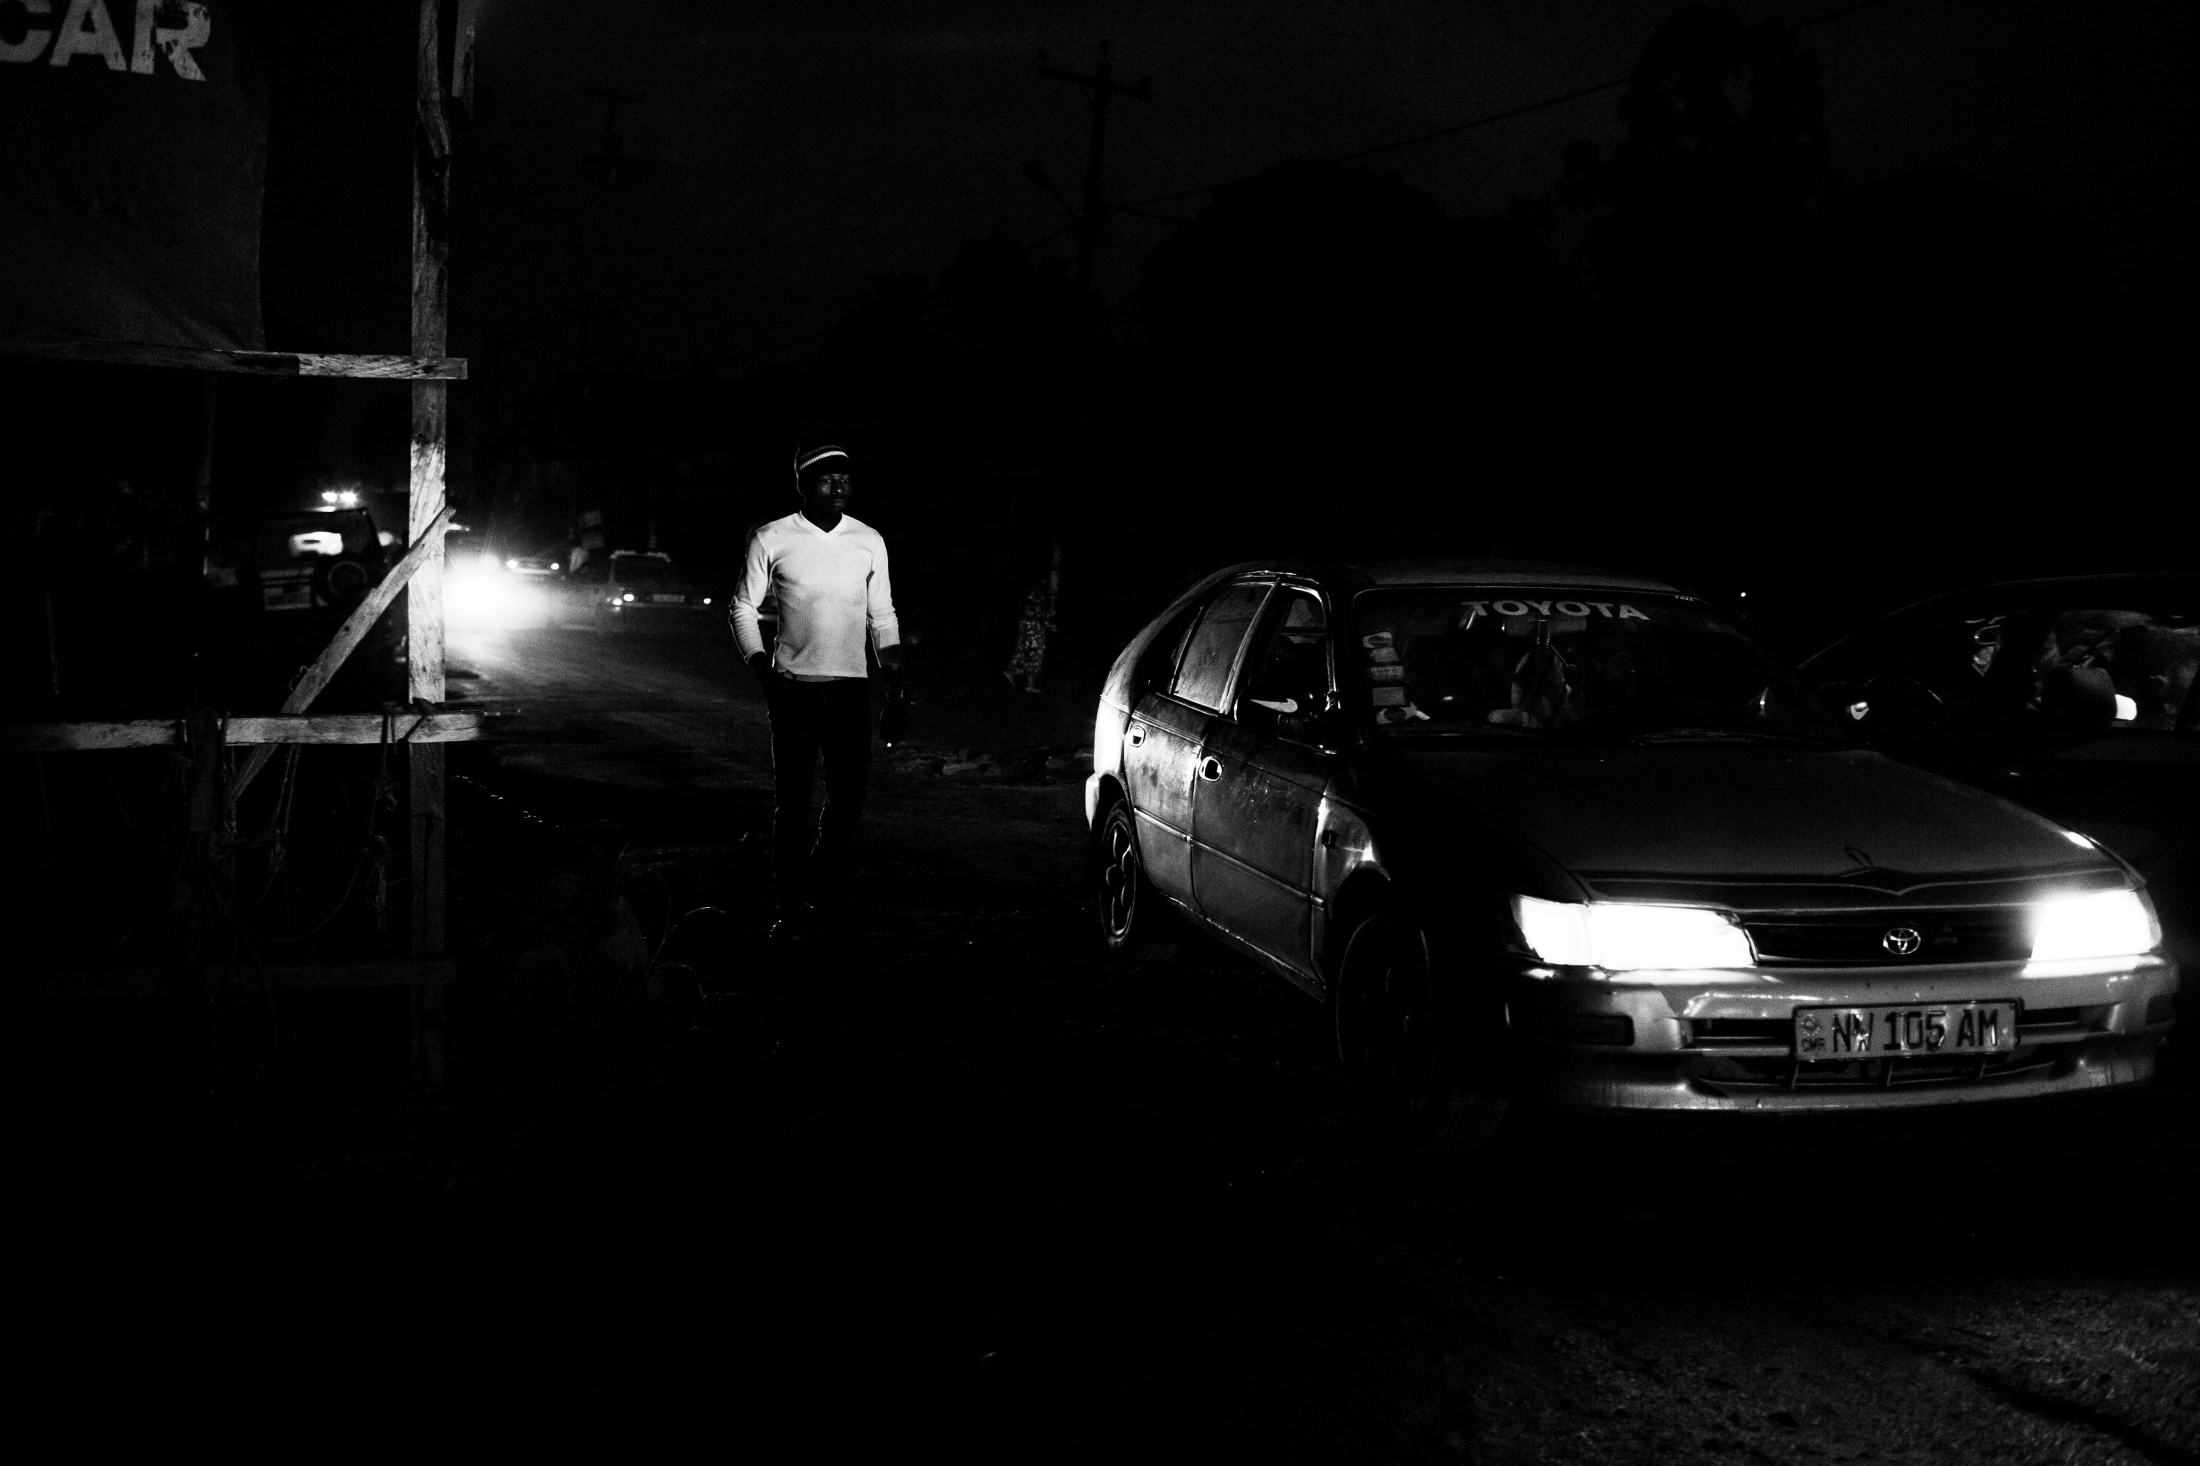 bamenda, cameroon.night falls on nkwen street